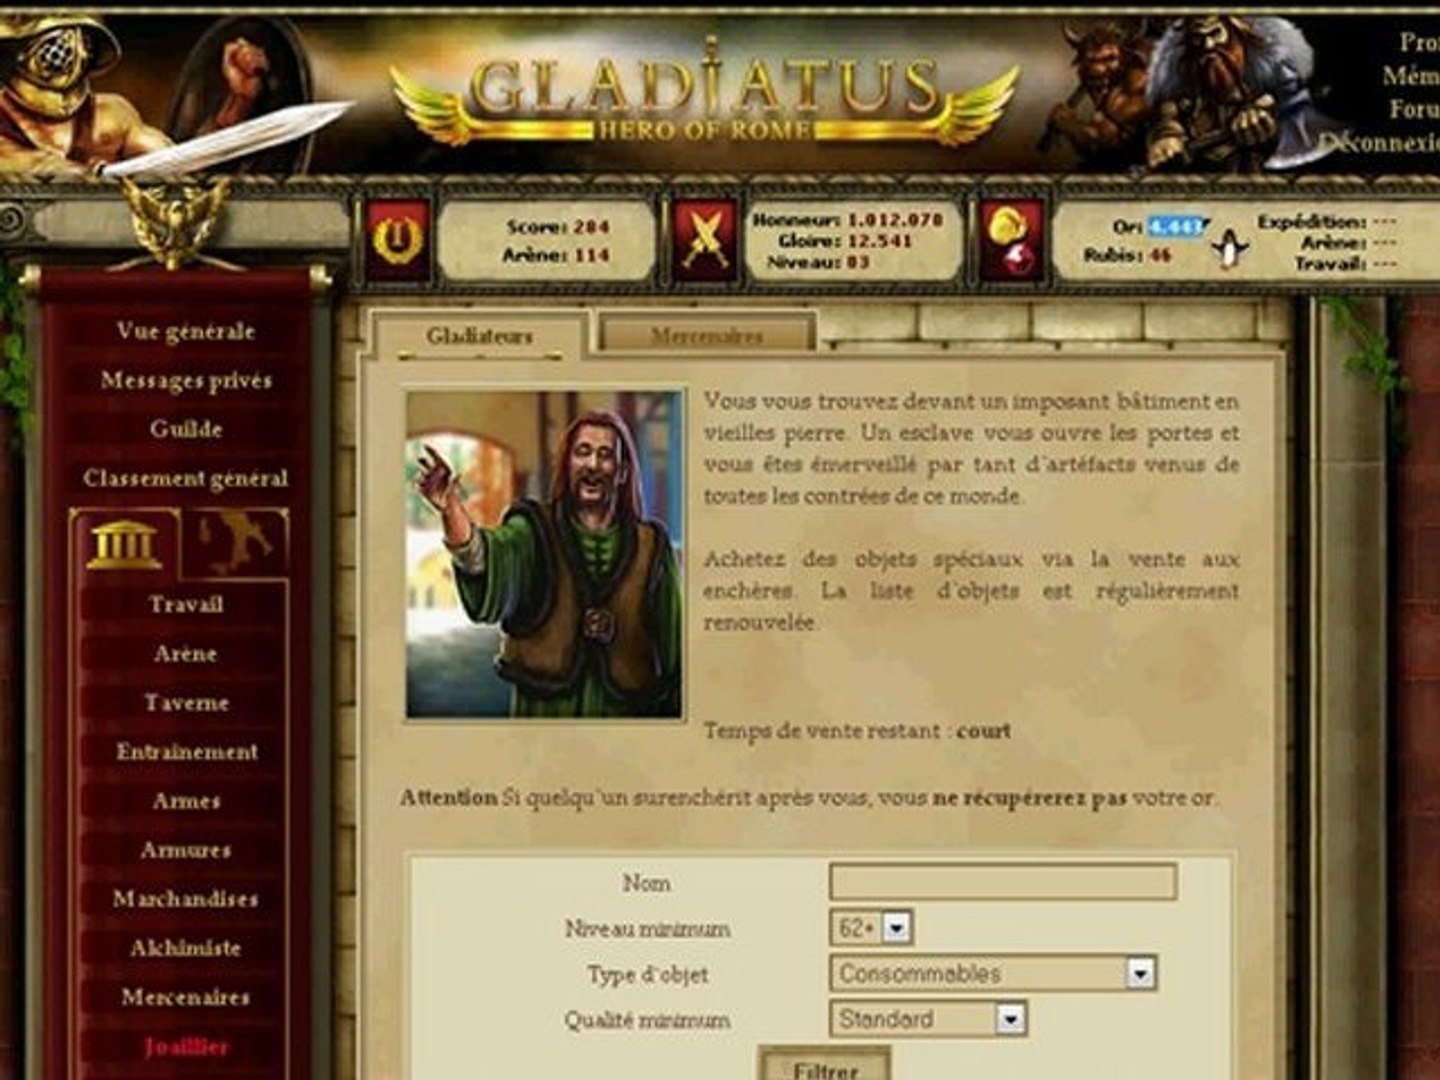 FAQ enchérir dans gladiatus video FSC - Vidéo Dailymotion